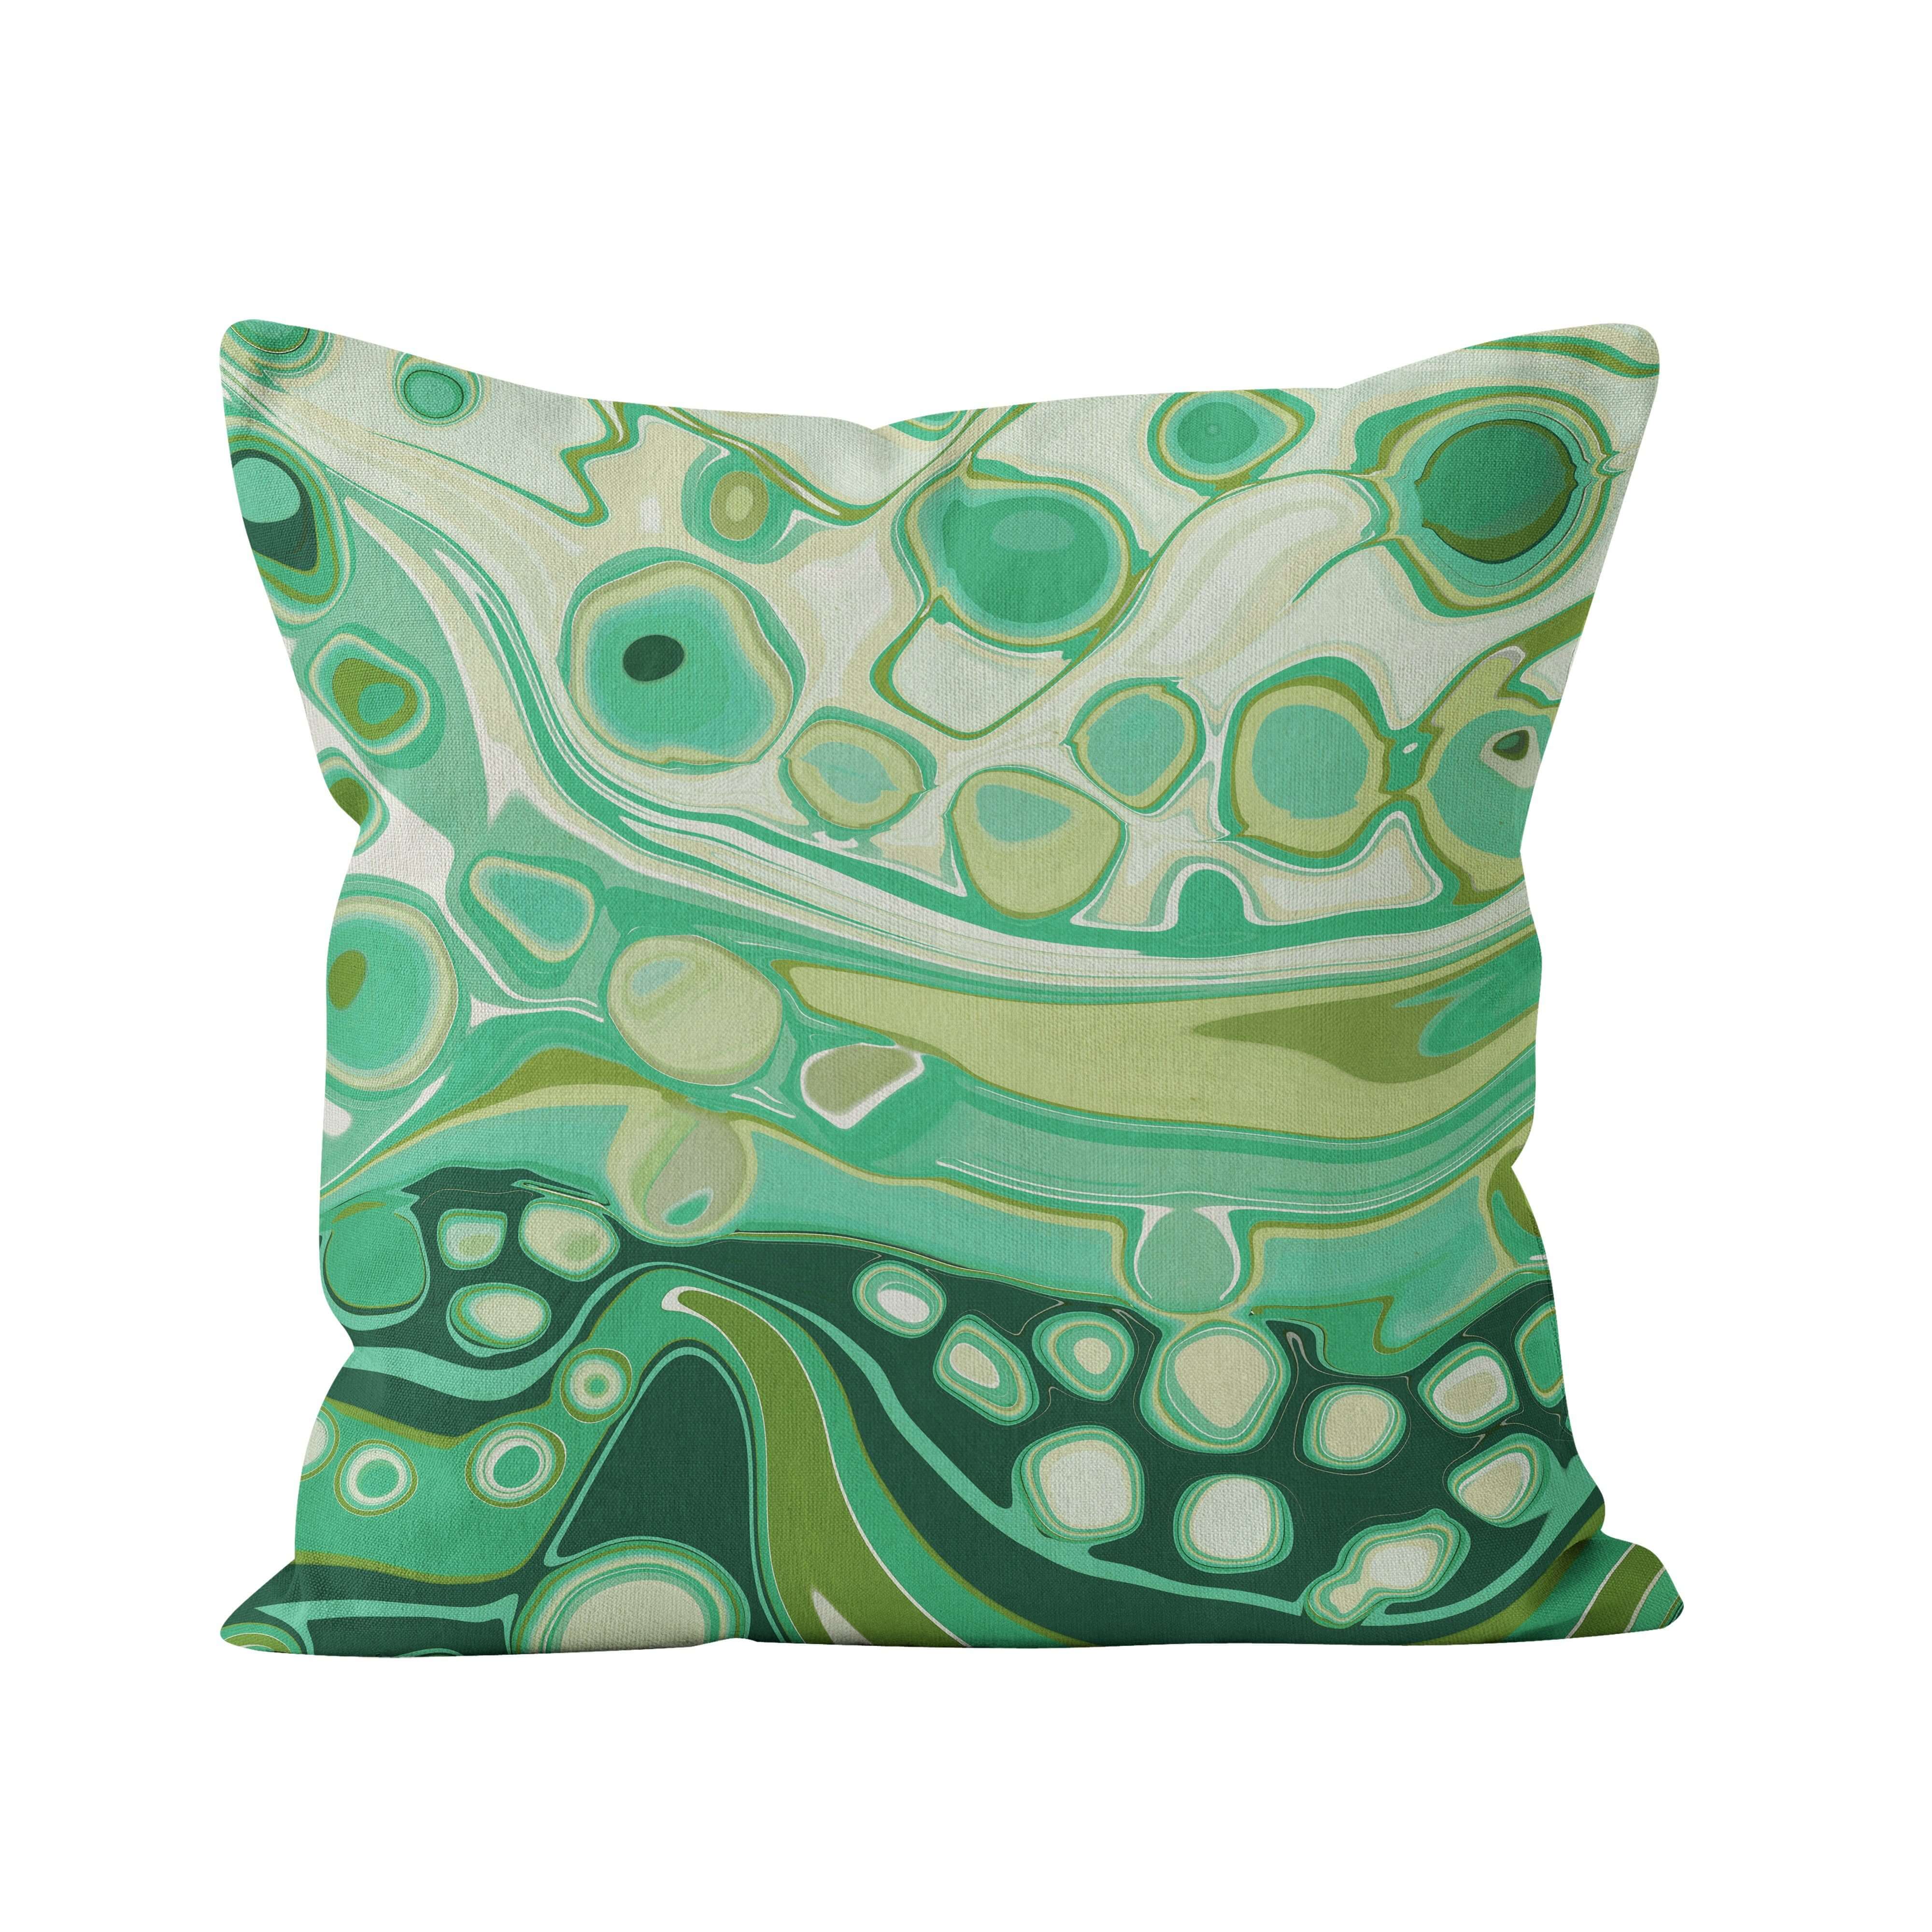 'Mpjito' Green Cushion - Louise Mead